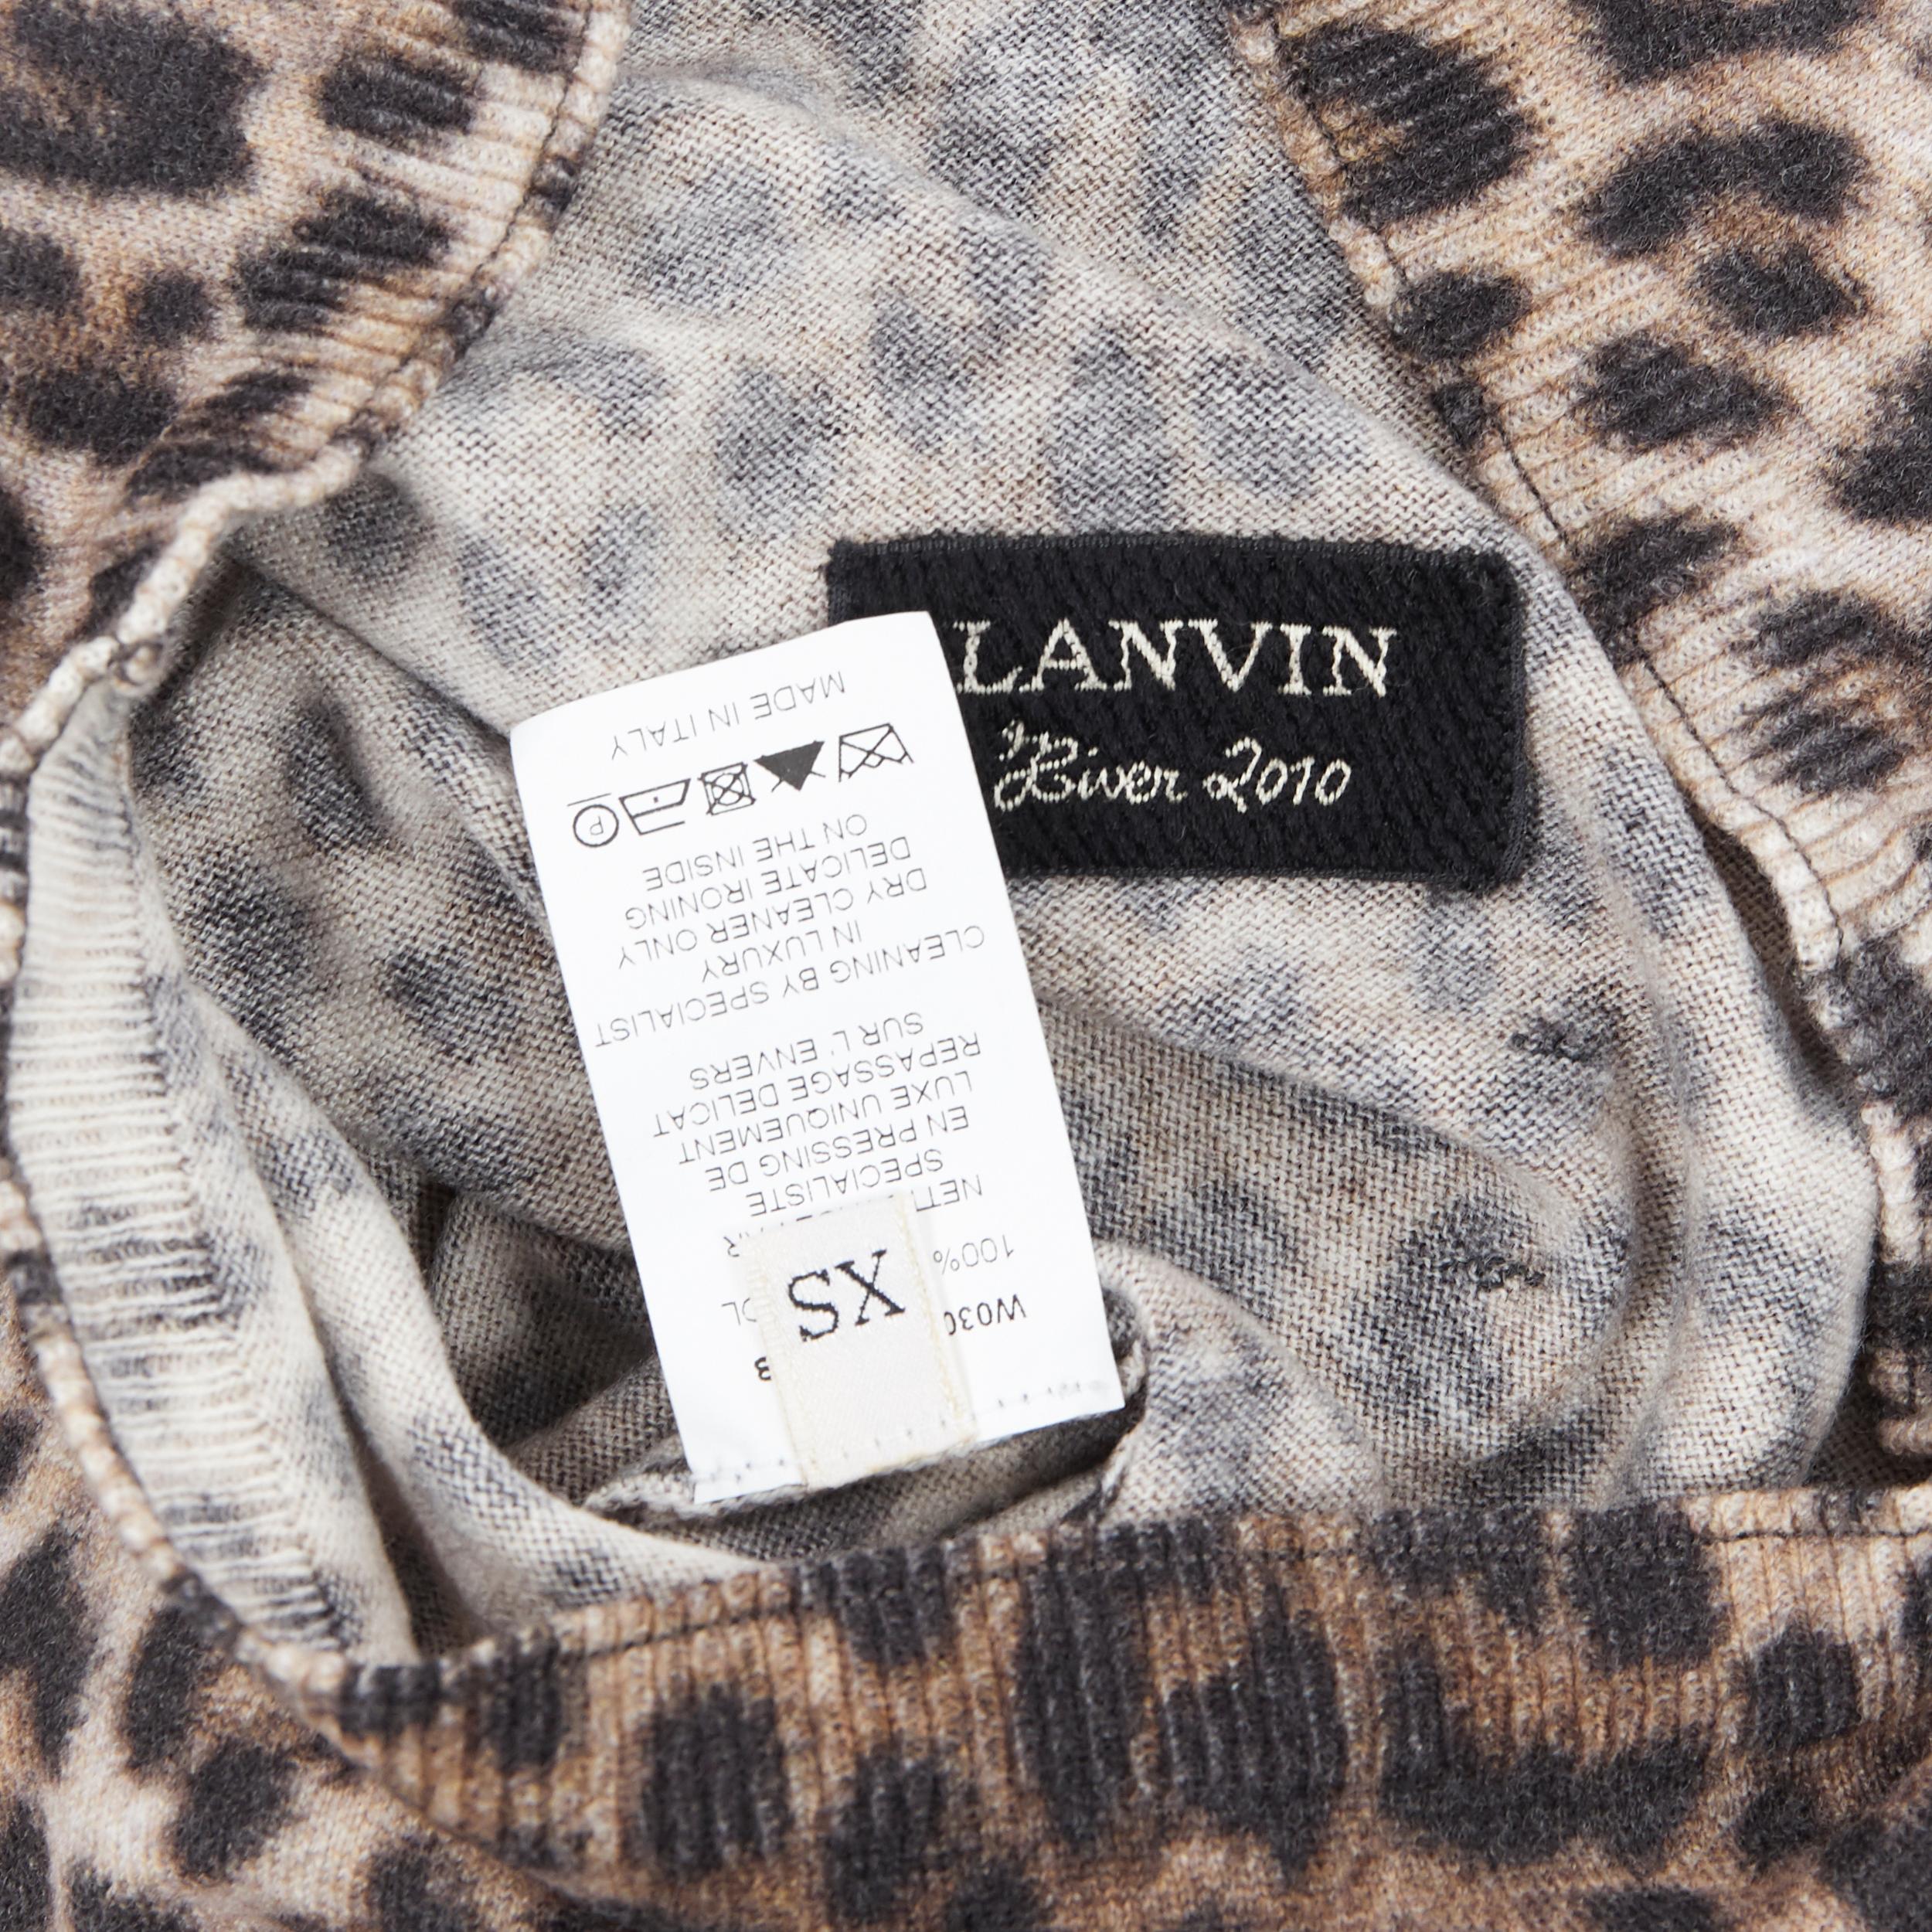 LANVIN Elbaz 2010 100% wool brown leopard spot pullover slit sleeve sweater XS 3